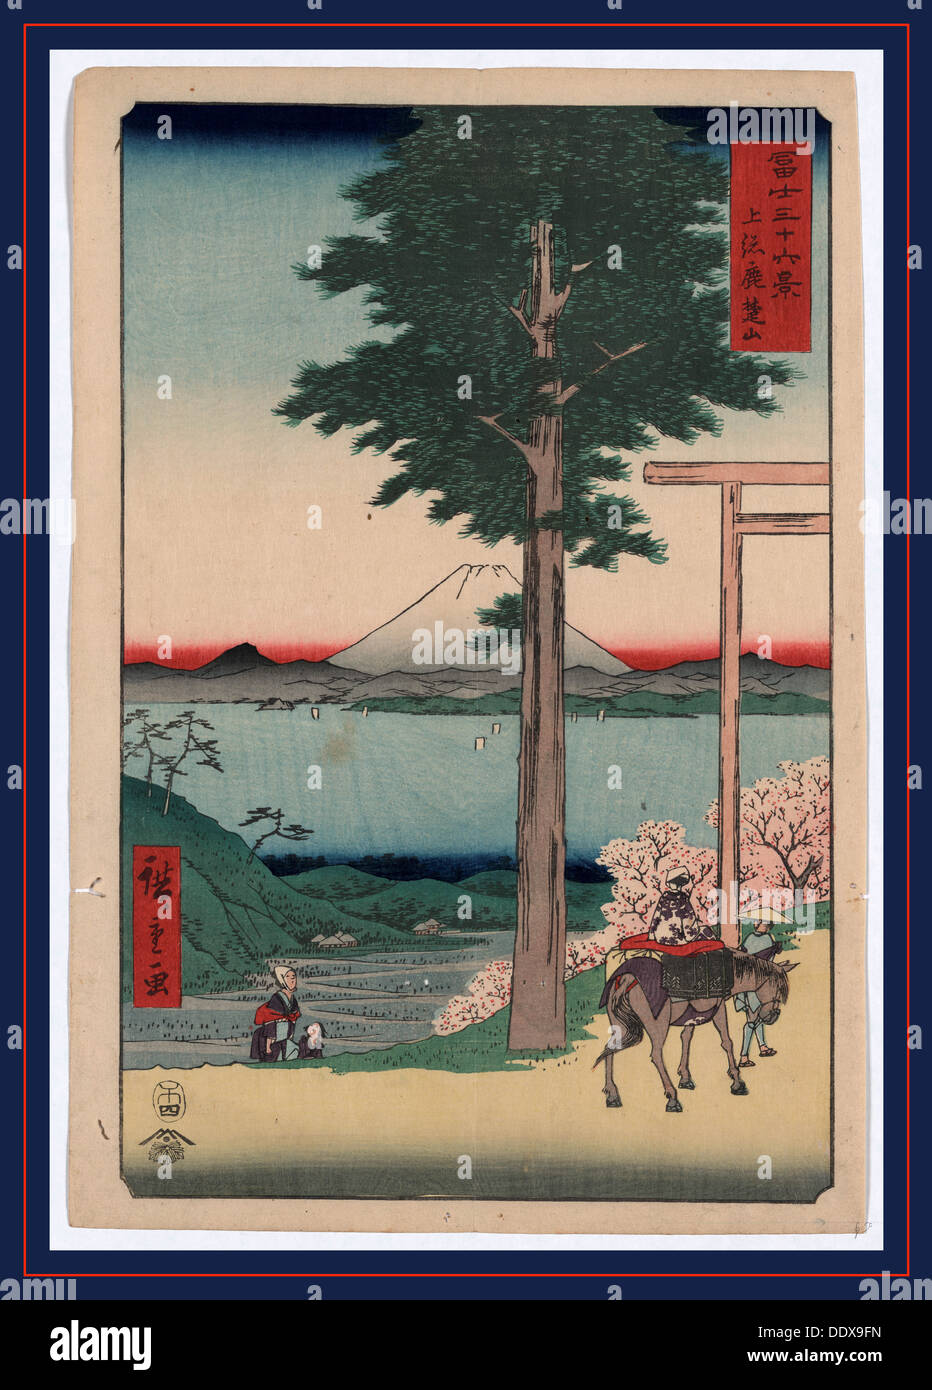 [Kazusa Kanozan], Mount Kano in Kazusa Province. [Tokyo] : Tsuta-ya Kichizo, 1858., 1 print : woodcut, color ; 36 x 24.6 cm., Stock Photo